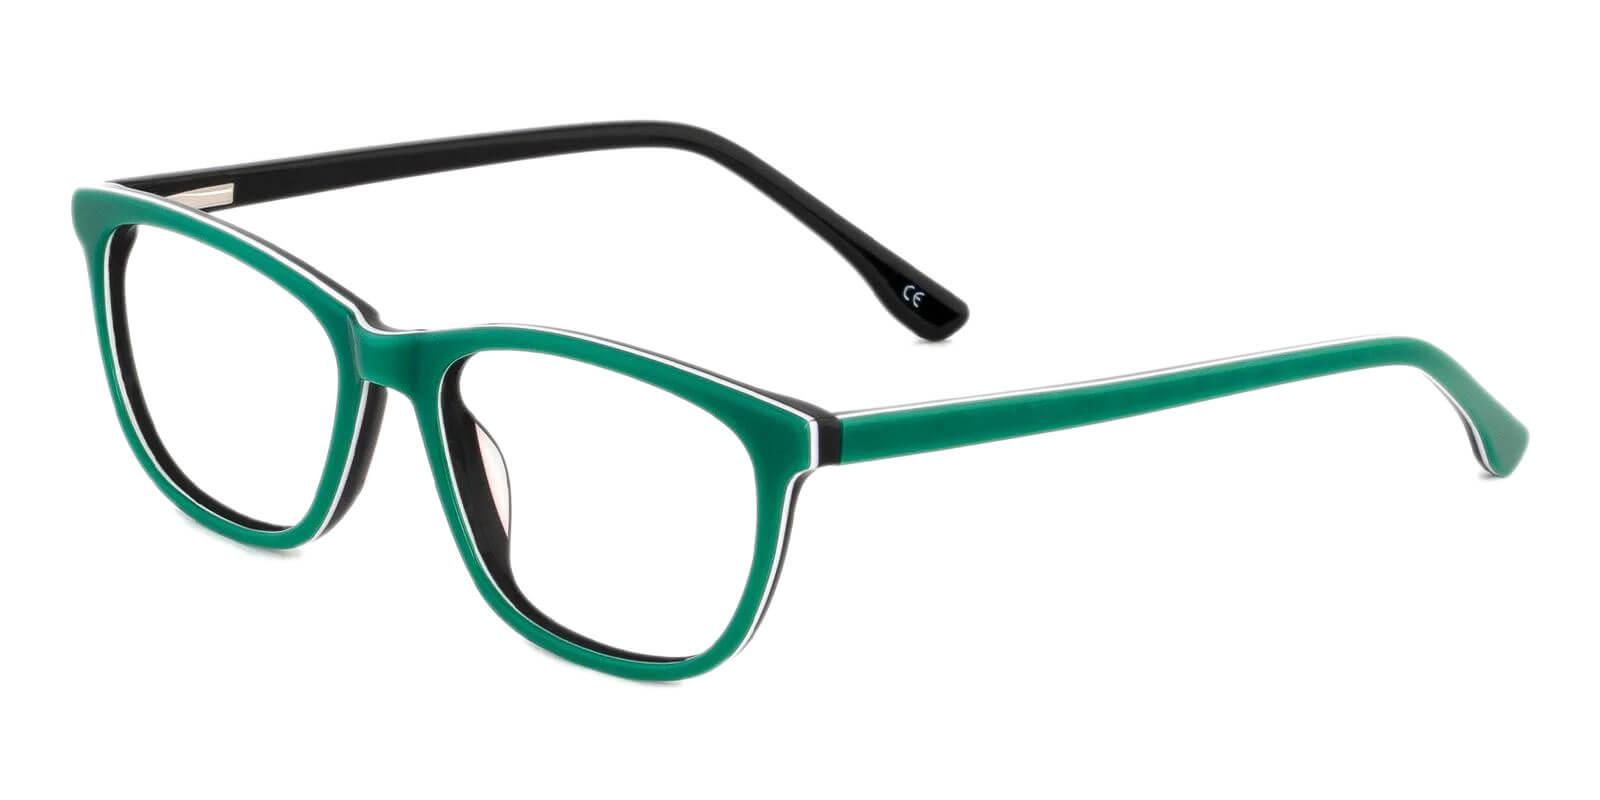 Machovec Green Acetate SpringHinges , UniversalBridgeFit , Eyeglasses Frames from ABBE Glasses